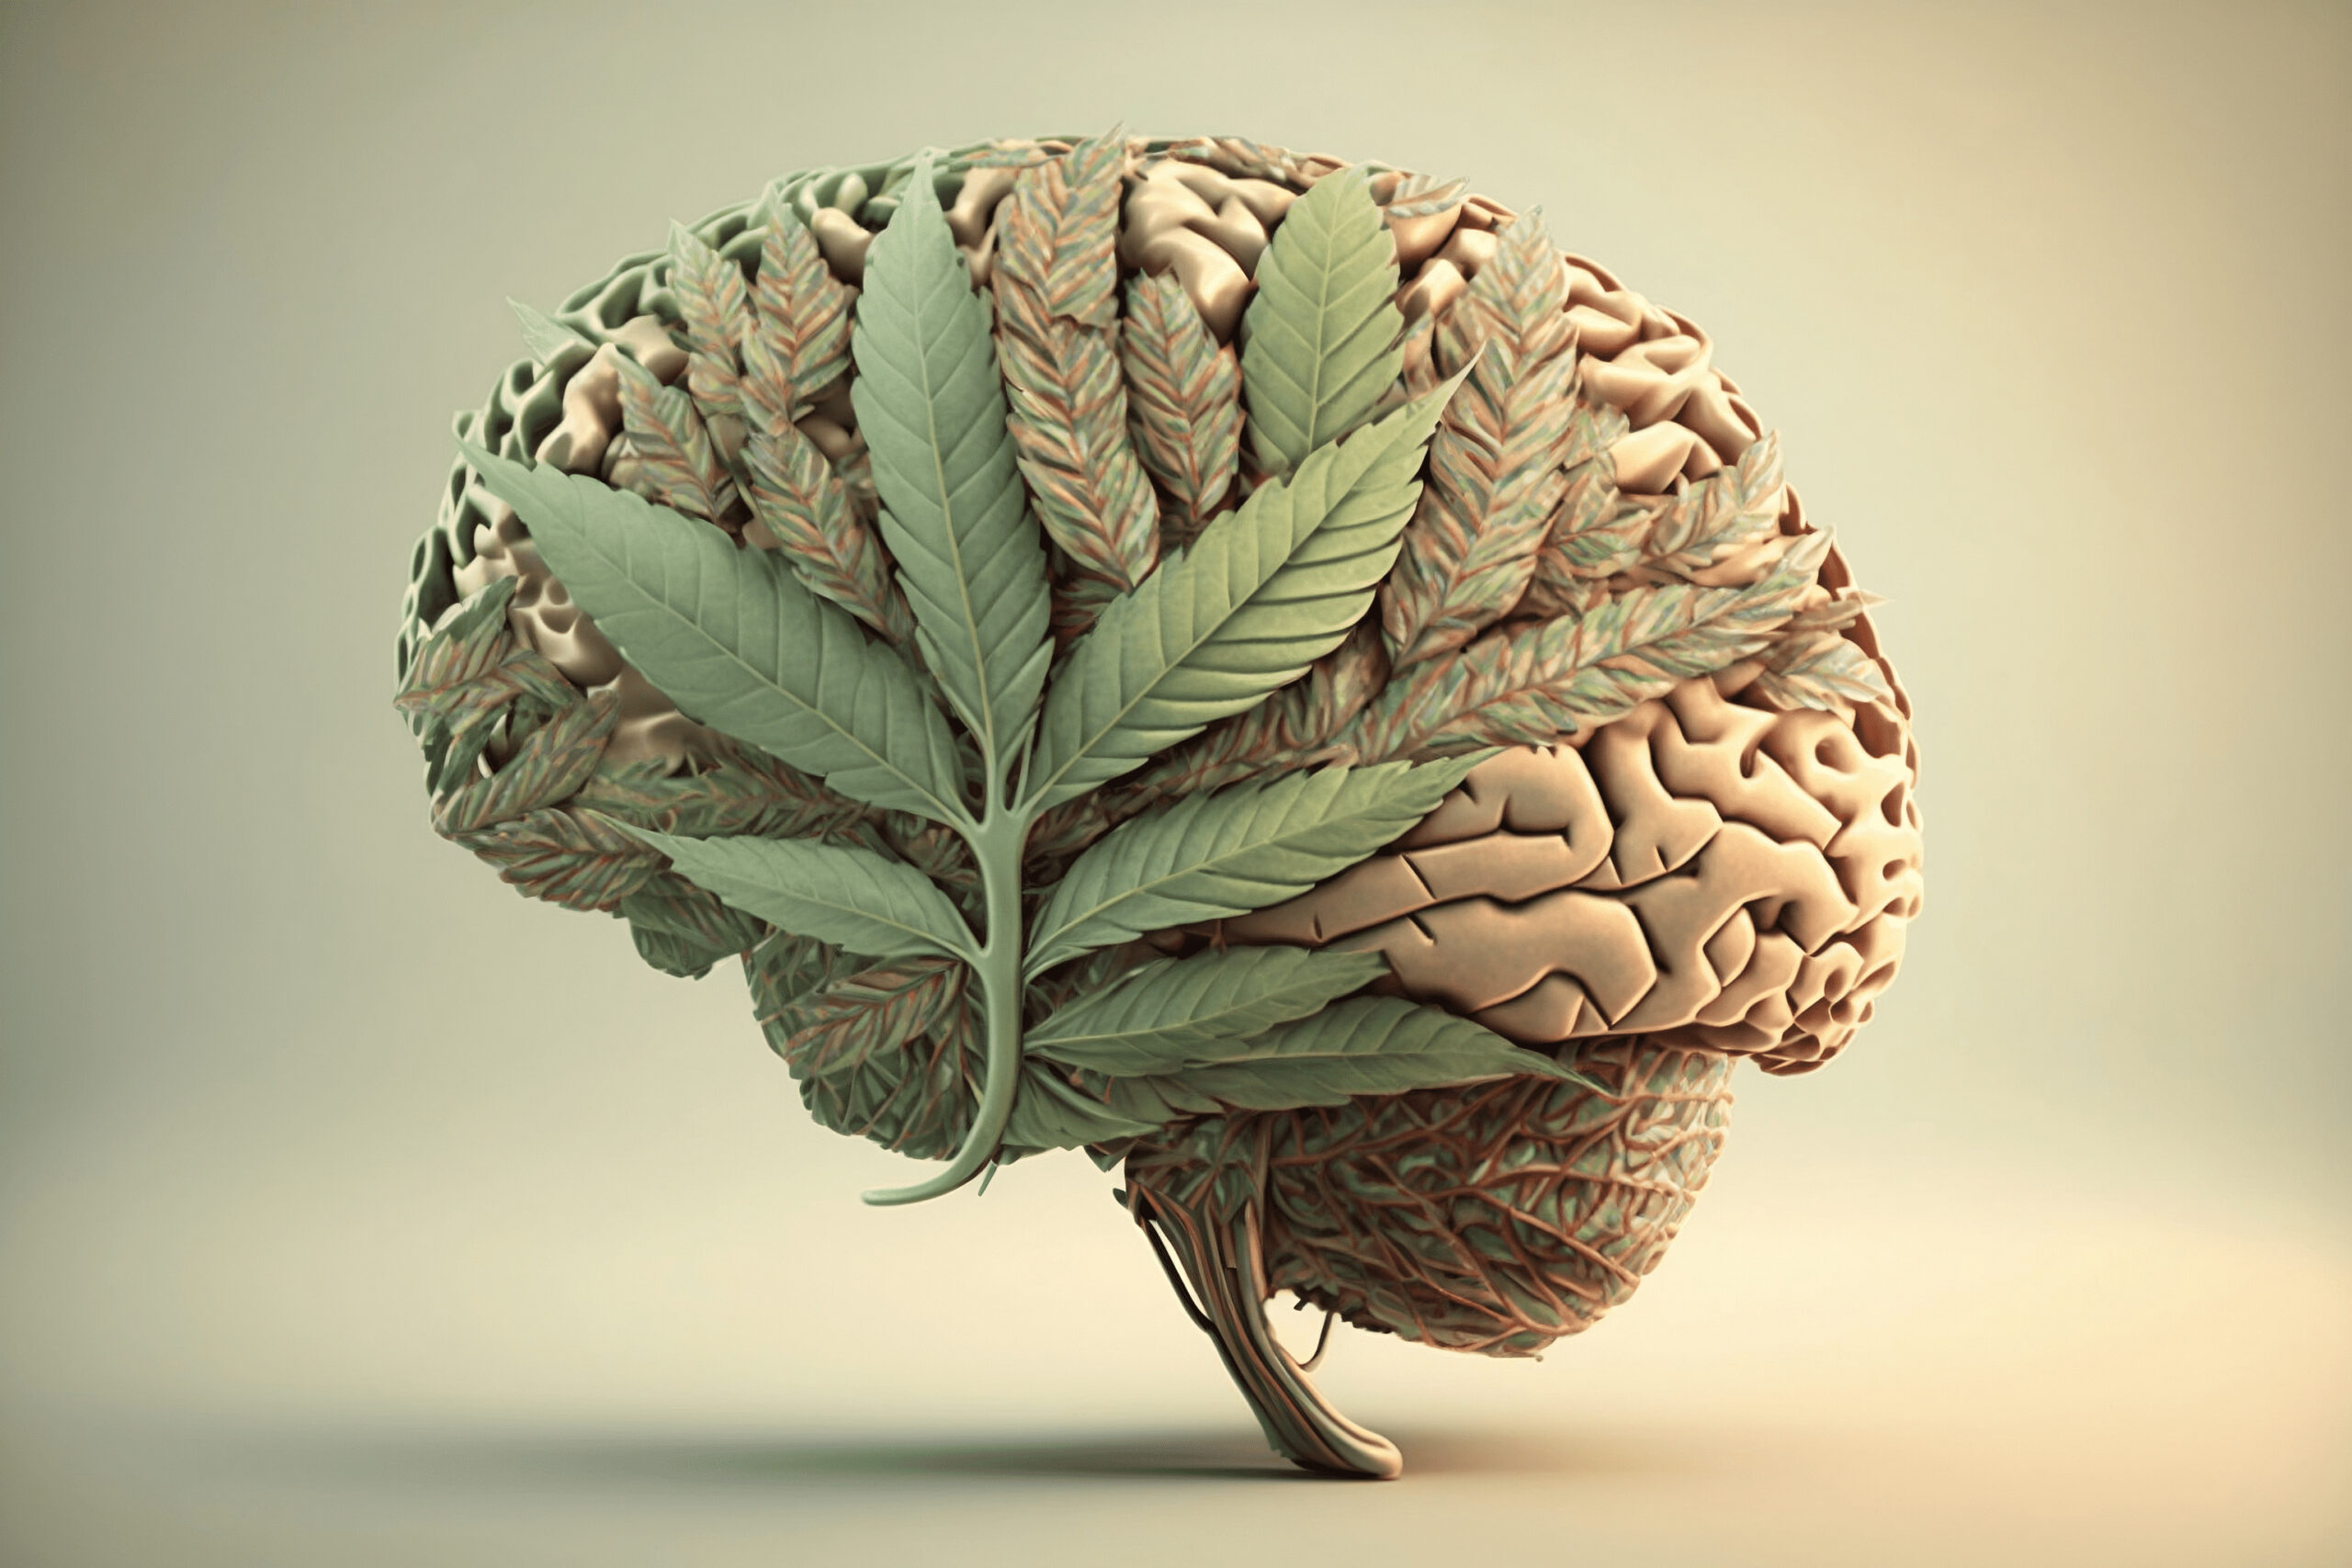 human brain made of hemp (medical marijuana, cannabis) leaves